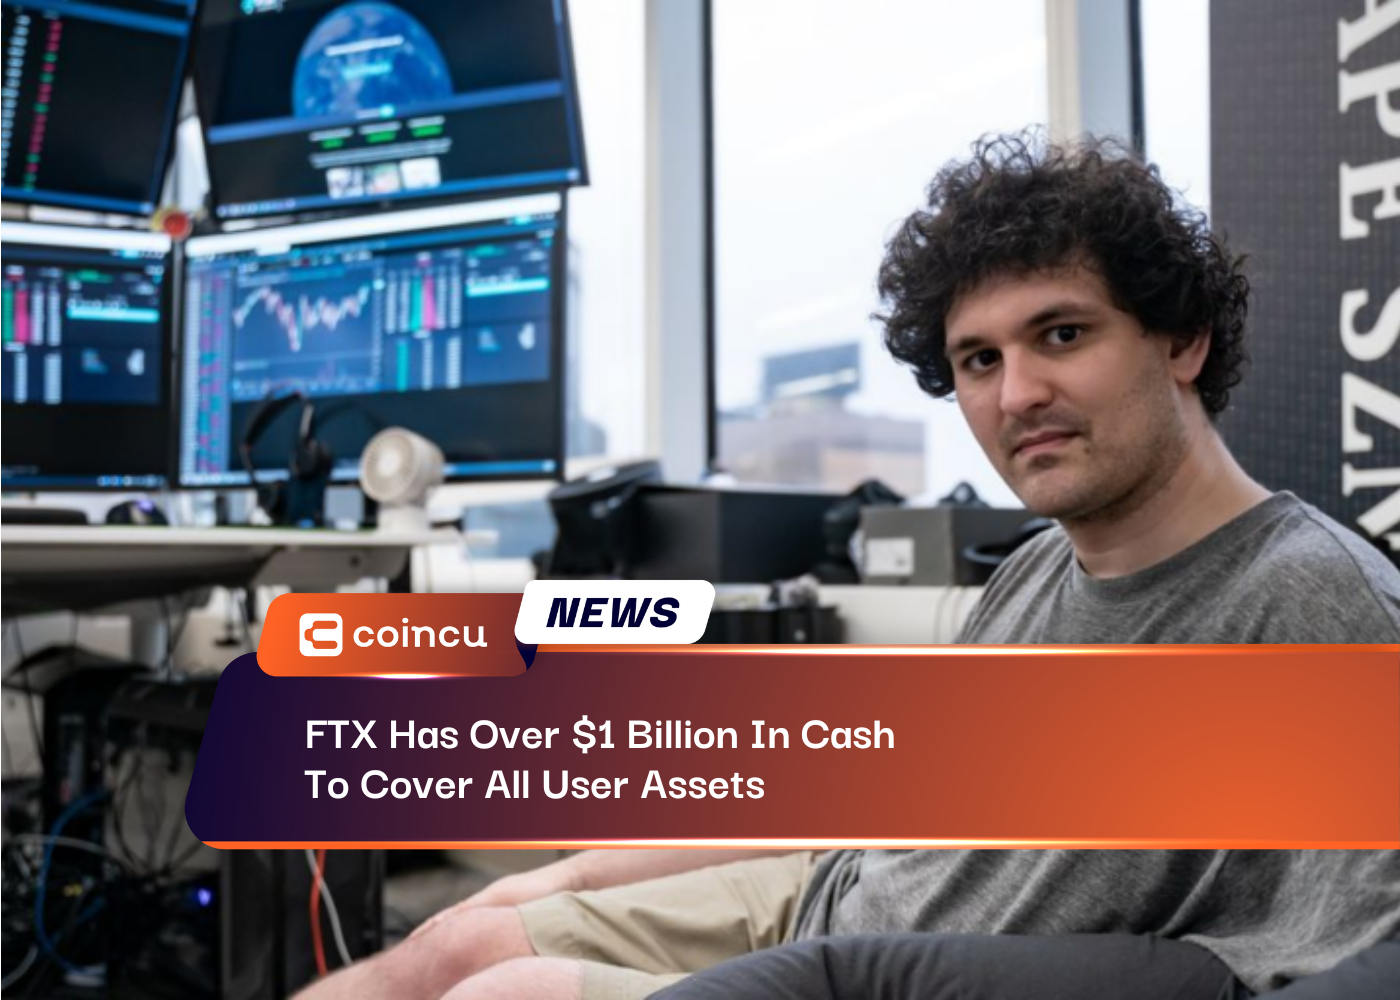 FTX拥有超过1亿美元的现金来覆盖所有用户资产